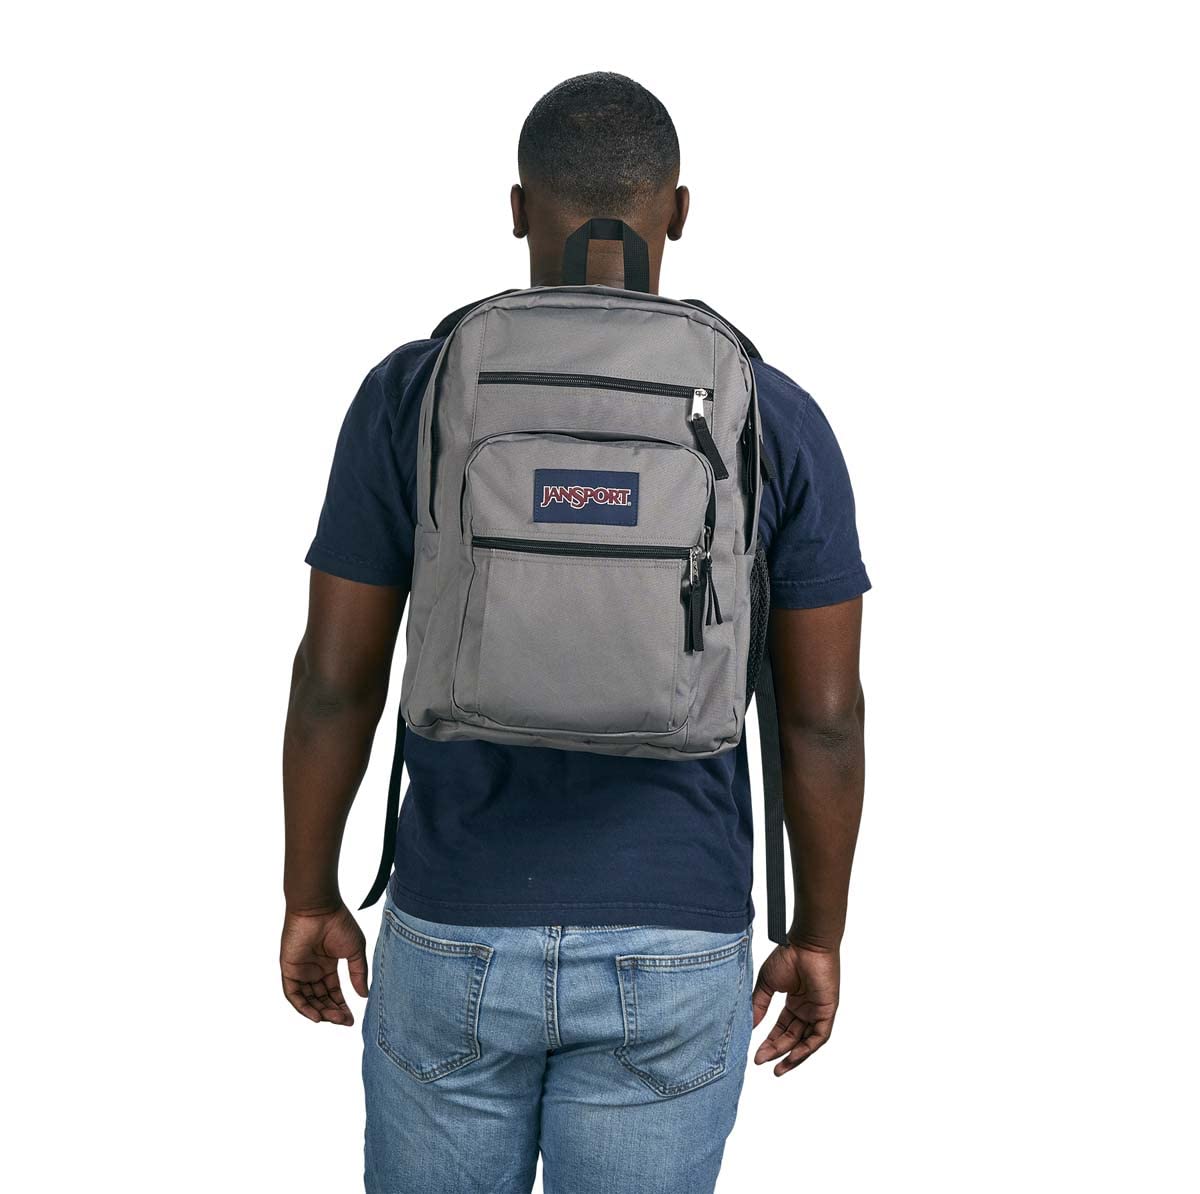 JanSport Laptop Backpack, Graphite Grey - Computer Bag with 2 Compartments, Ergonomic Shoulder Straps, 15” Laptop Sleeve, Haul Handle - Rucksack